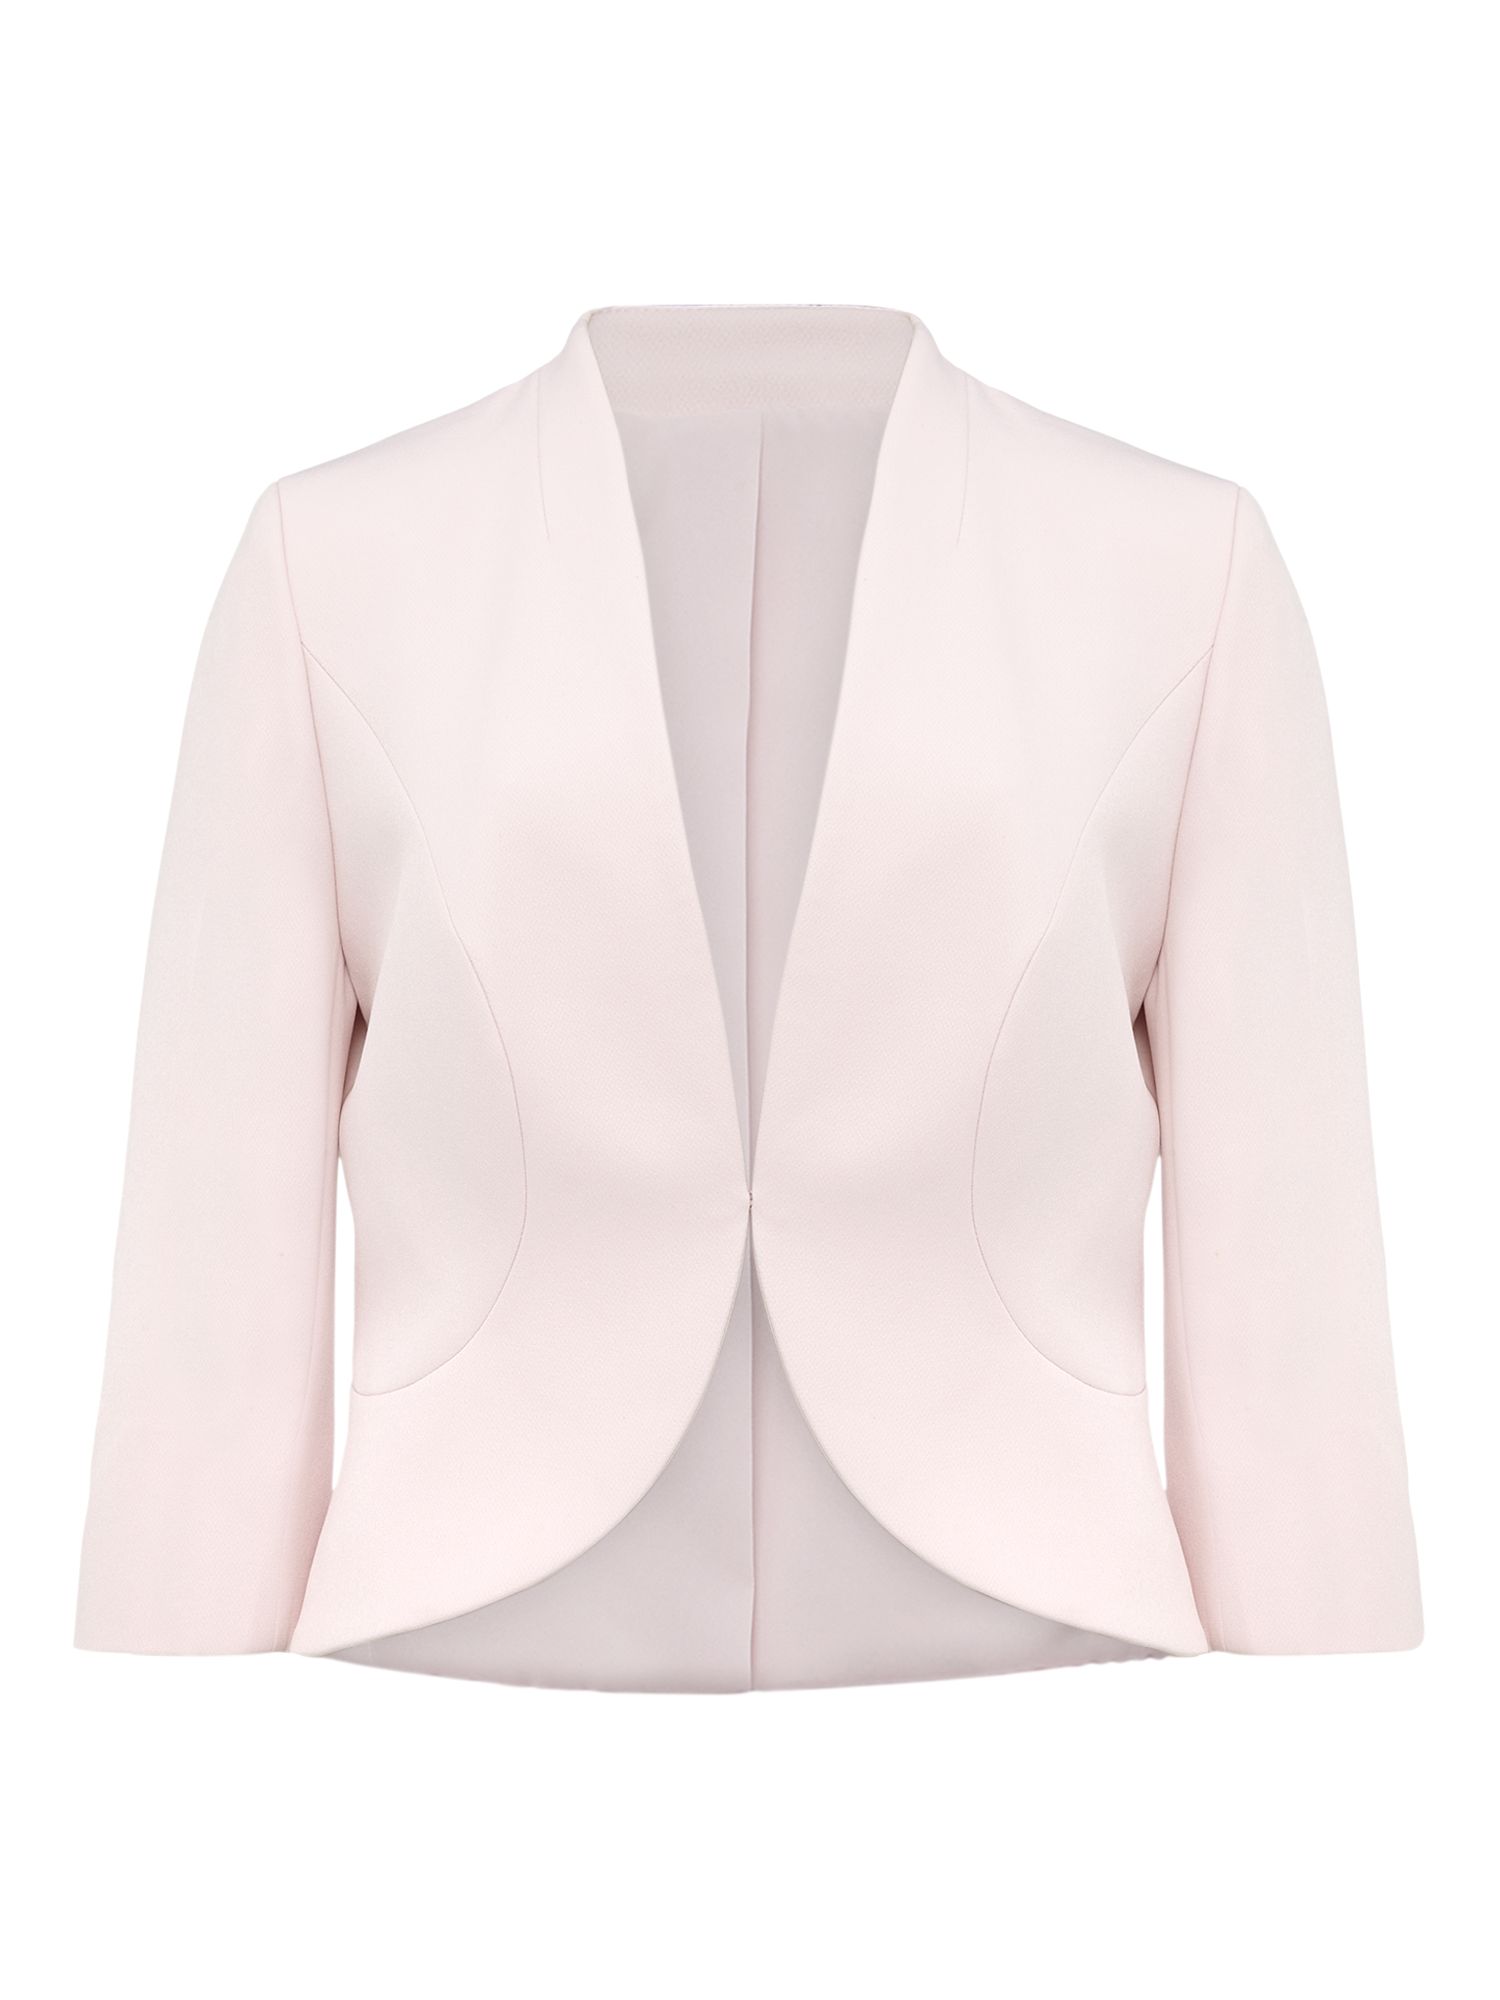 Phase Eight Tammy Jacket, Petal Pink at John Lewis & Partners